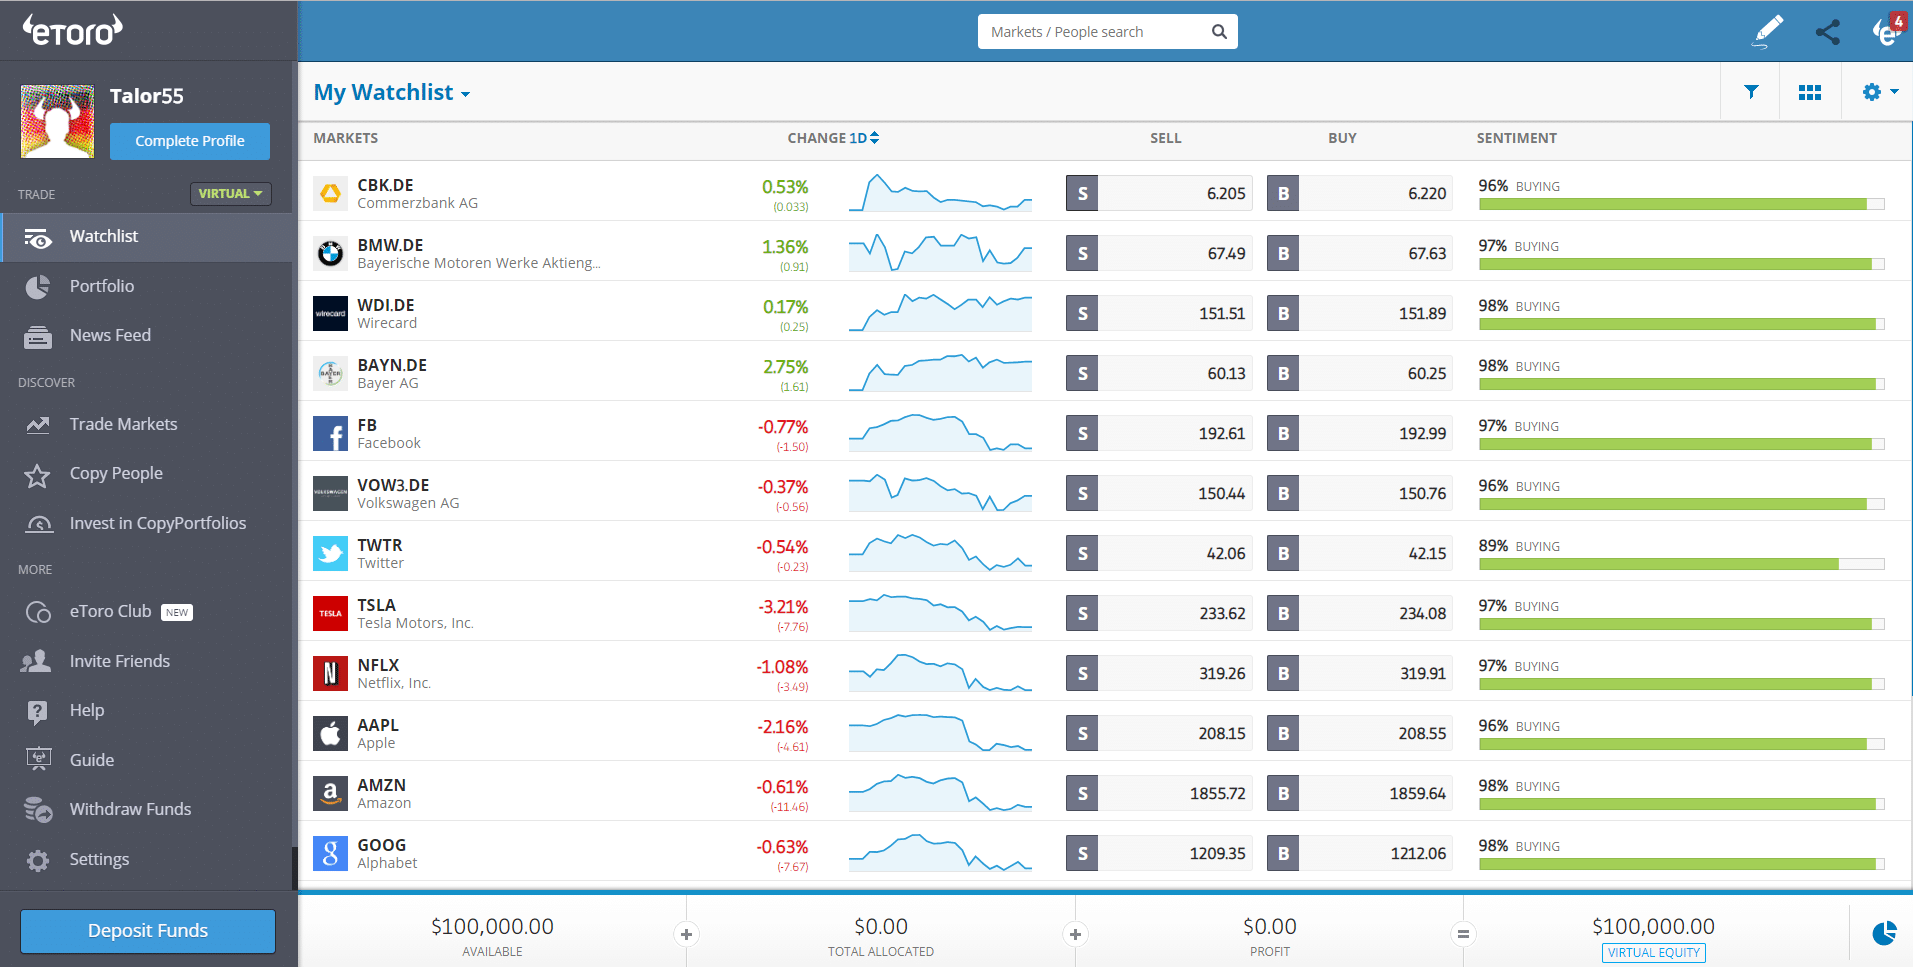 The eToro trading platform (Indicative prices for illustration purposes)